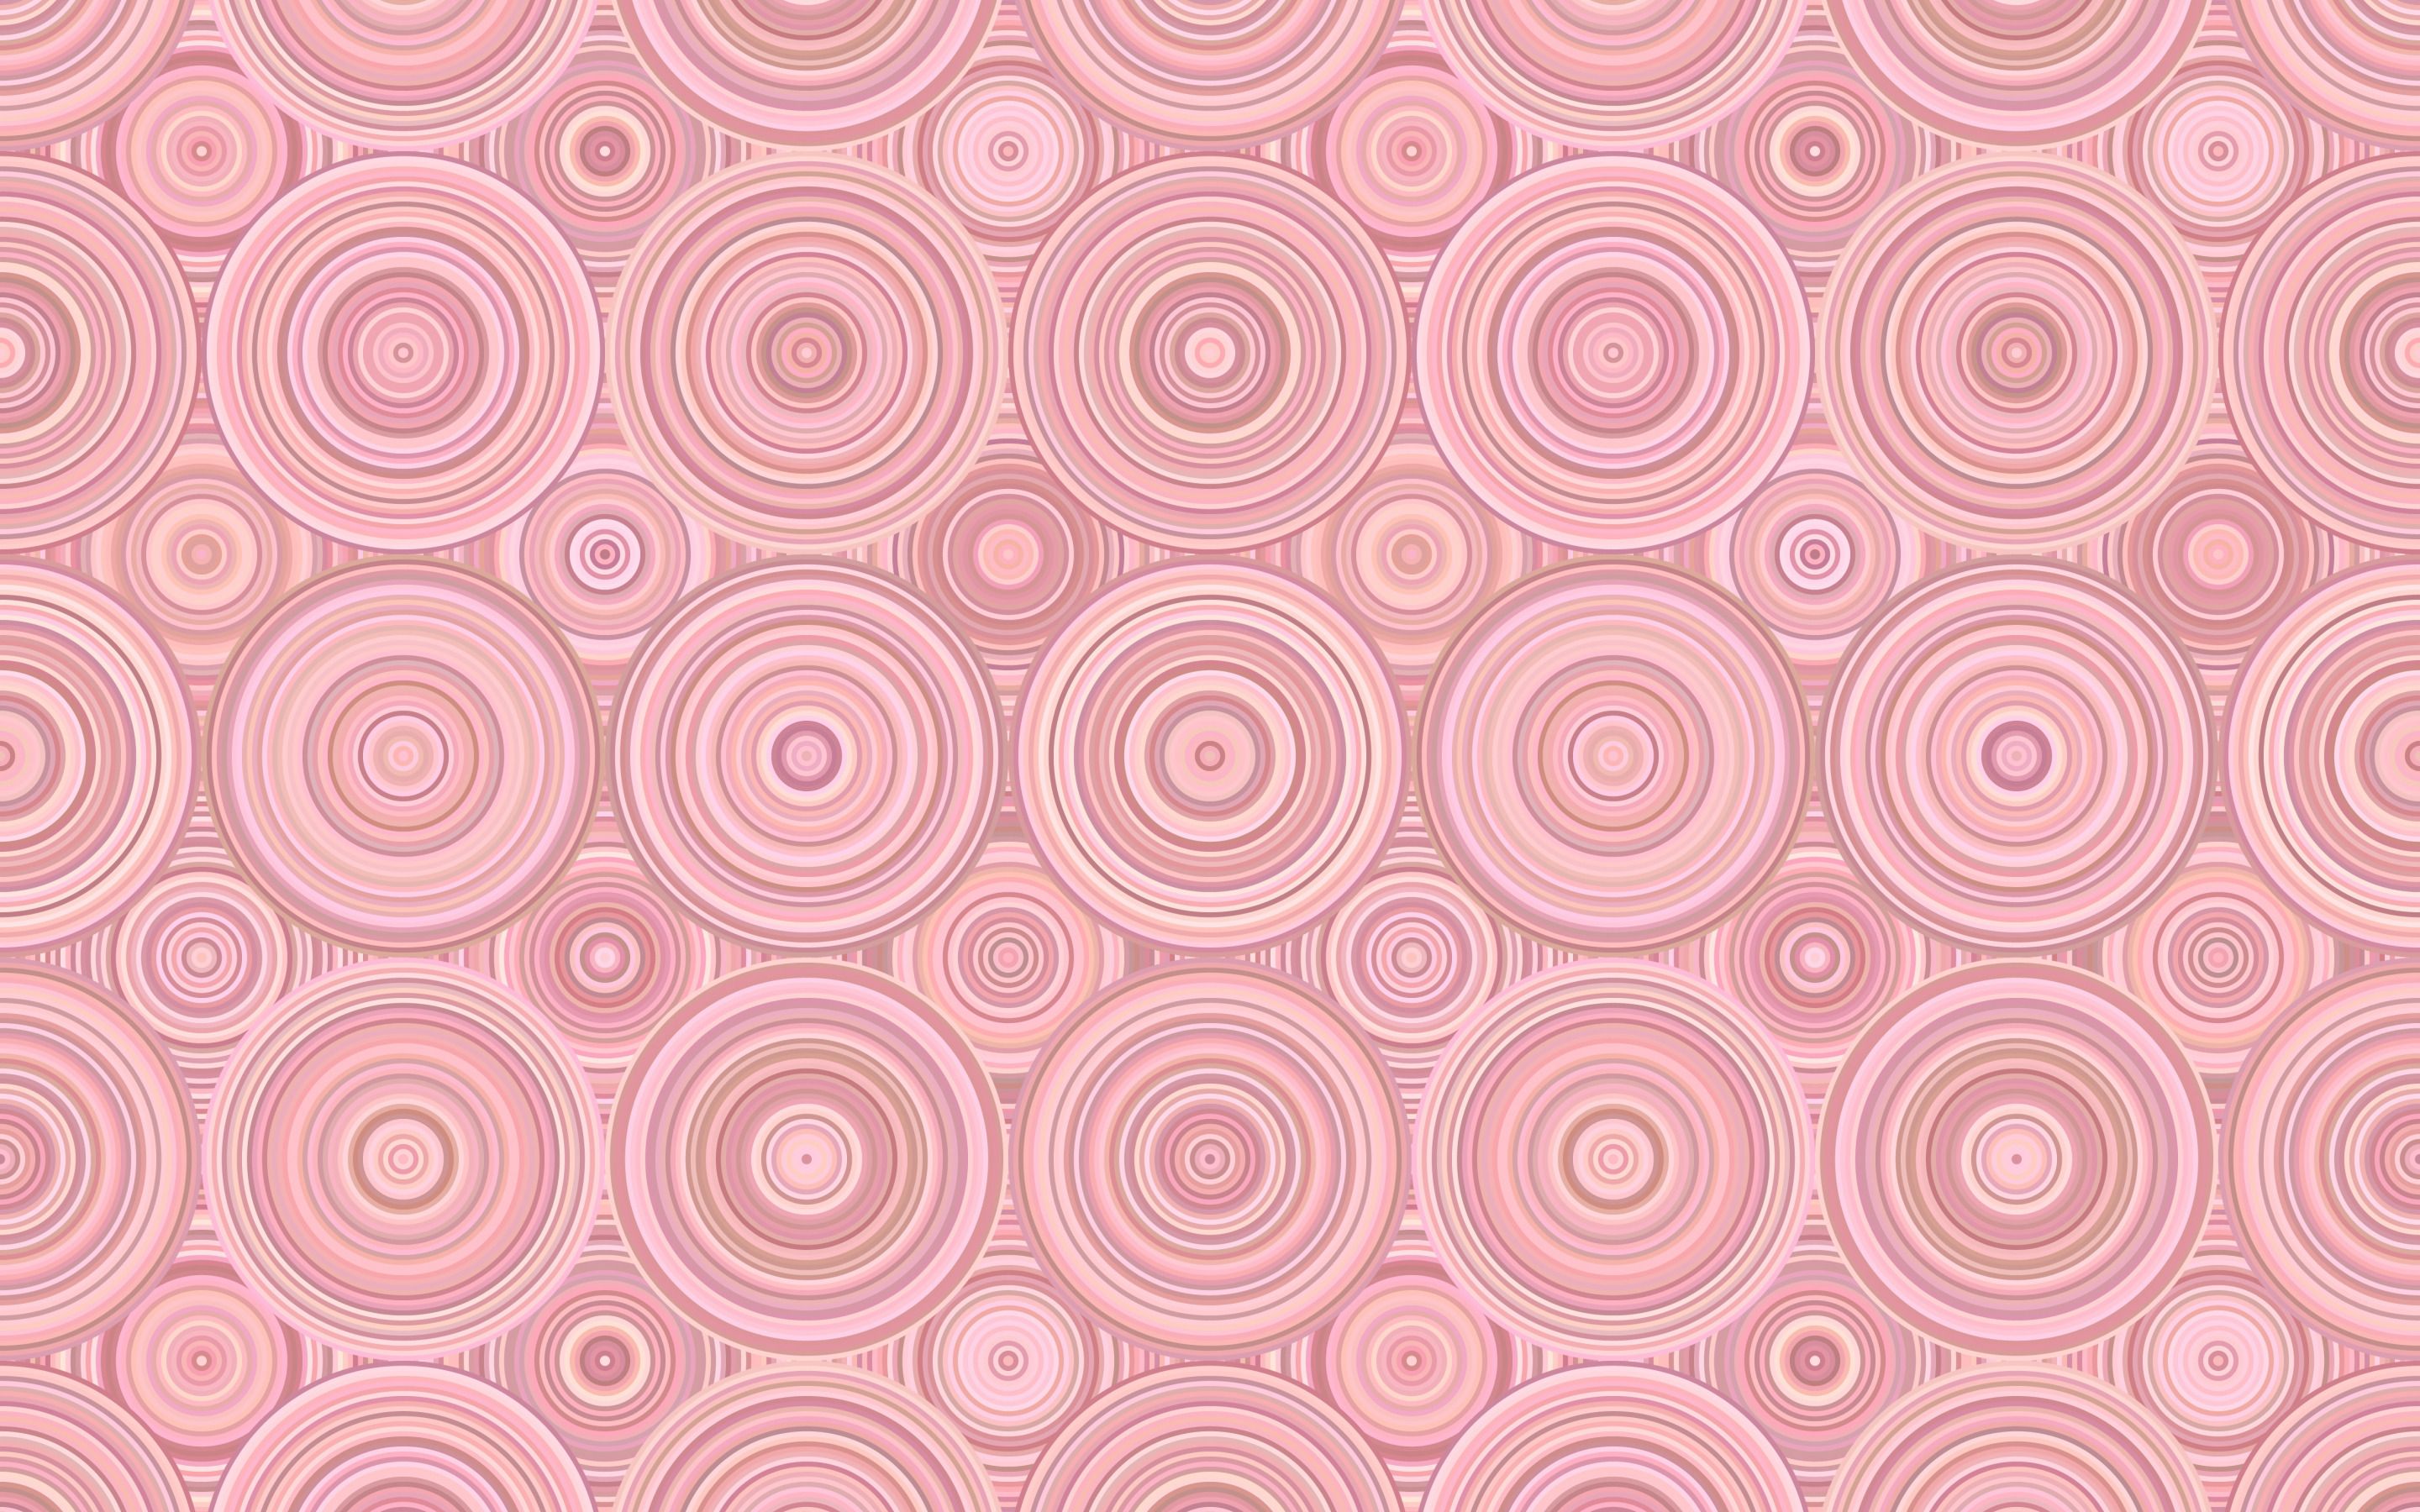 Download wallpaper pink retro texture with circles, retro circles